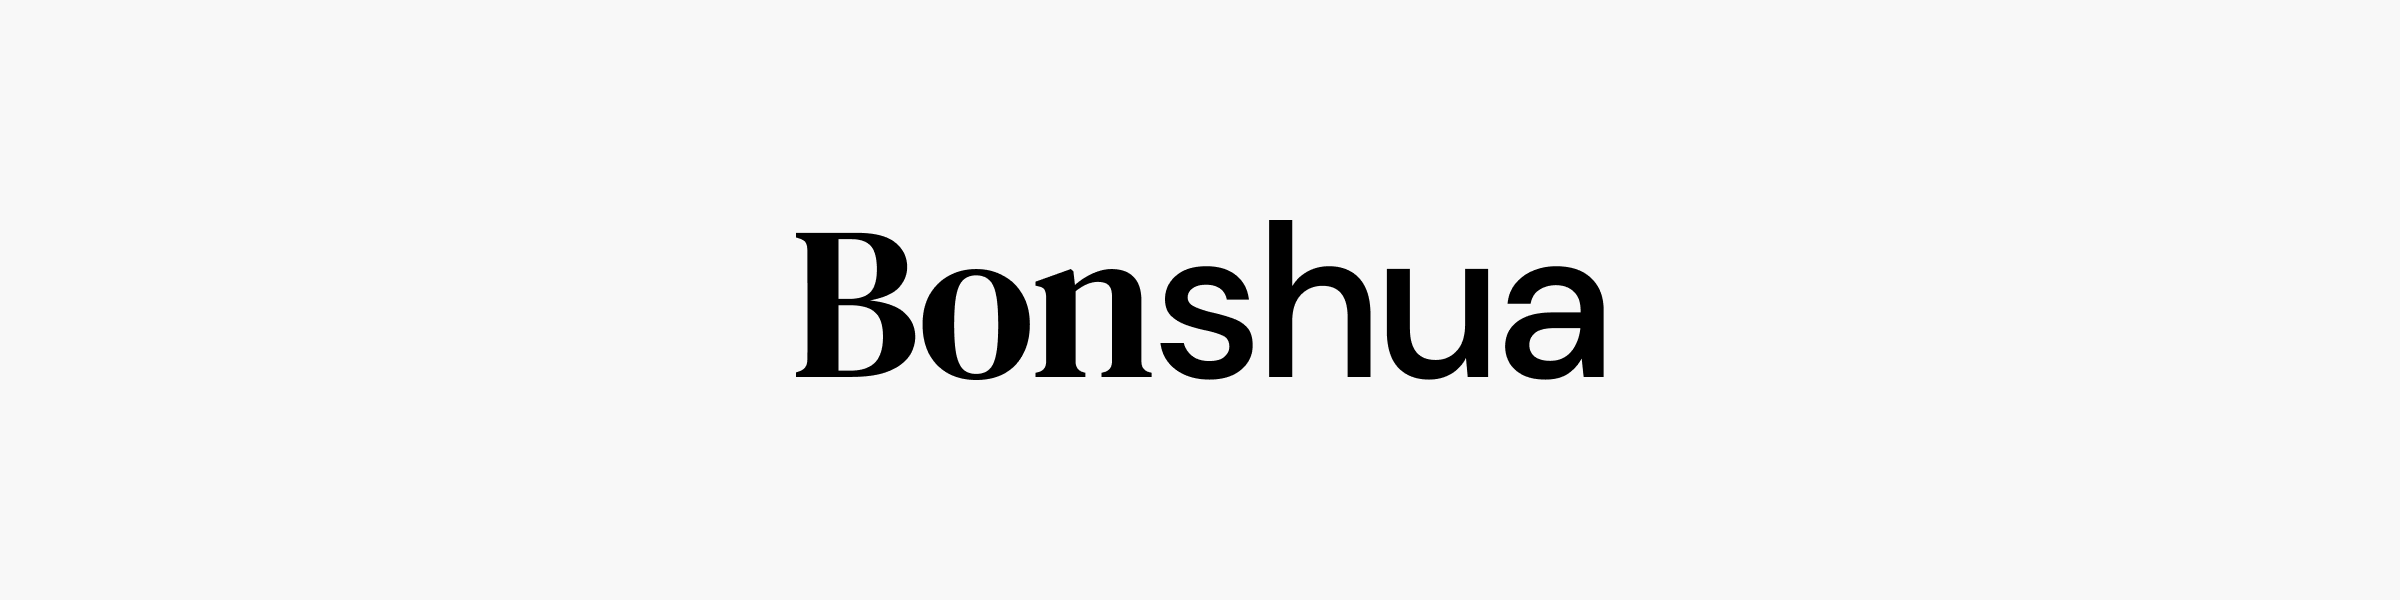 Bonshua